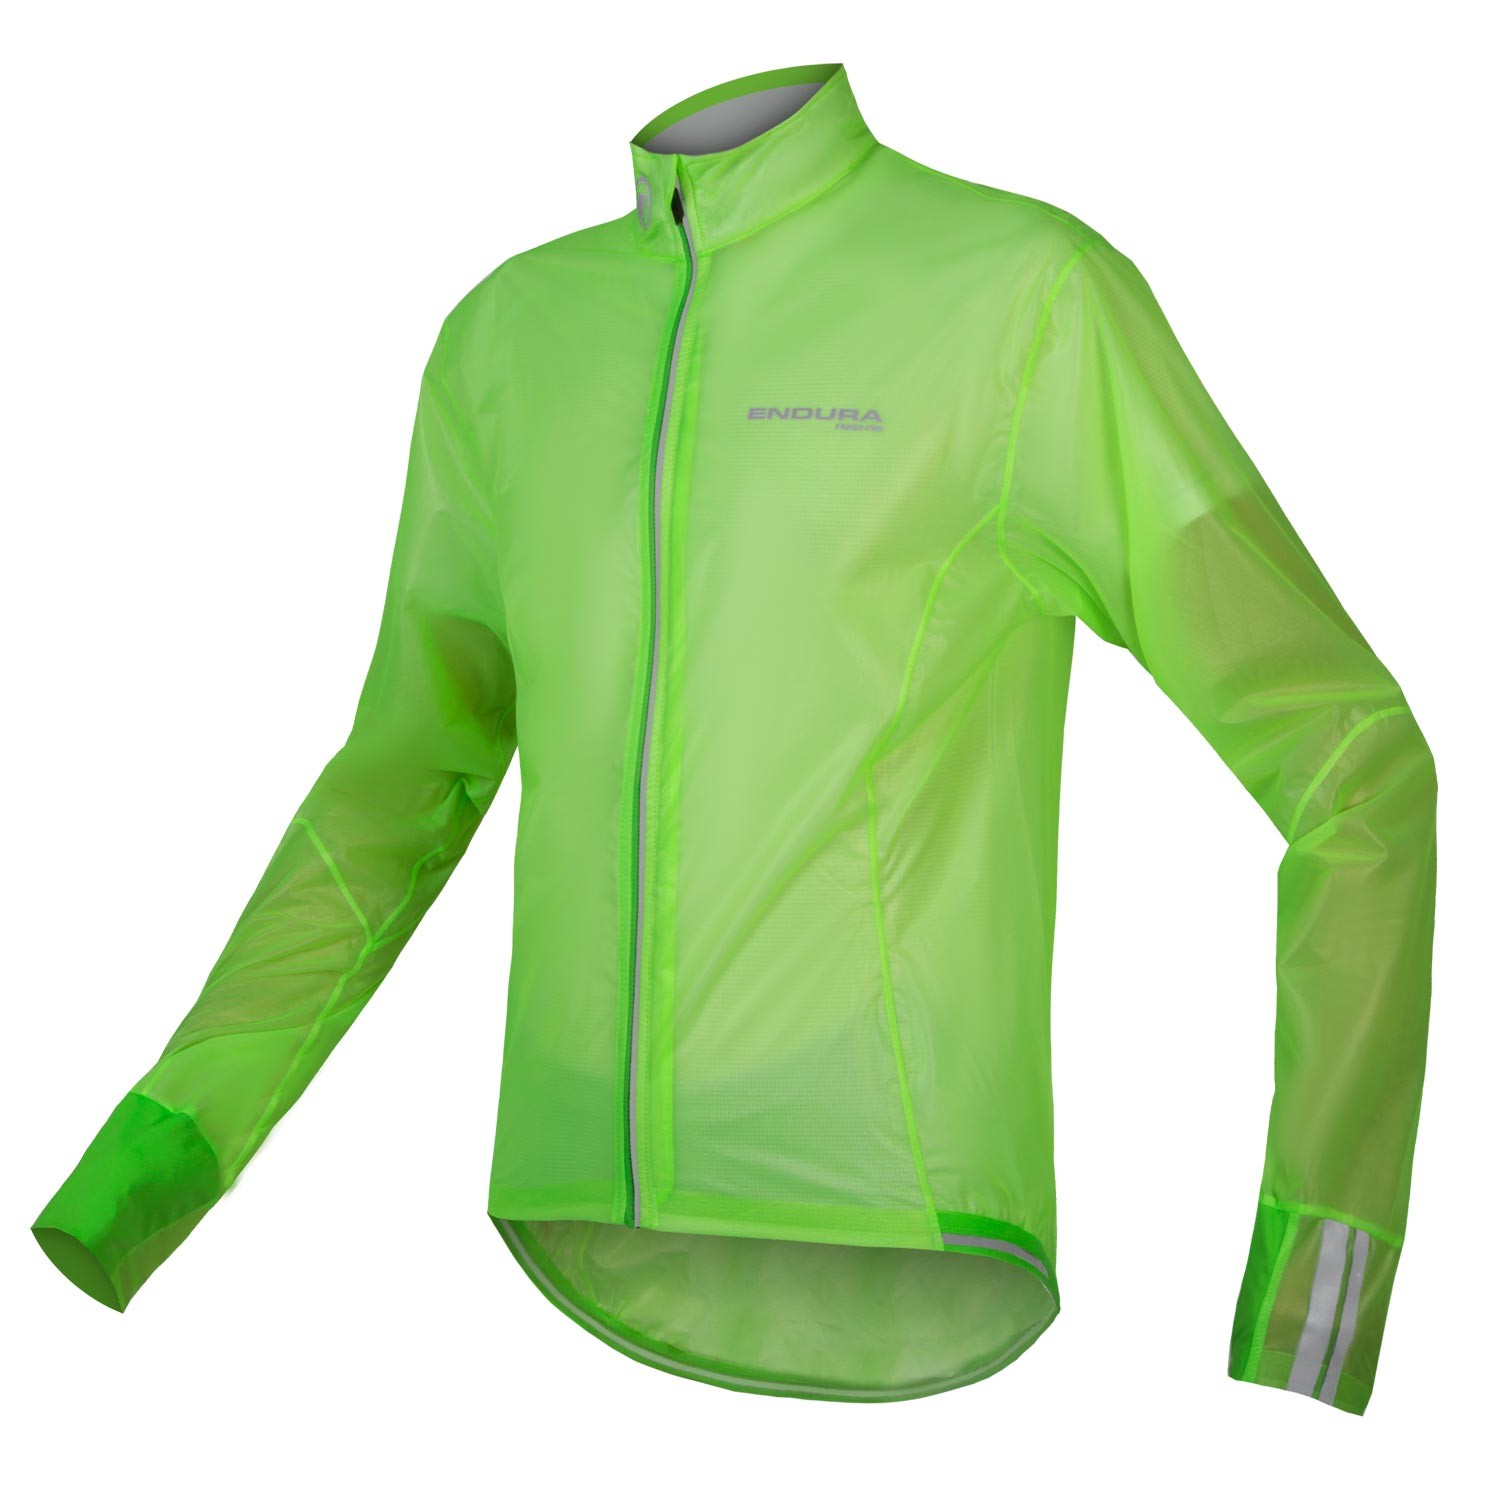 Endura FS260 pro adrenaline II race cape veste imperméable hi-viz vert